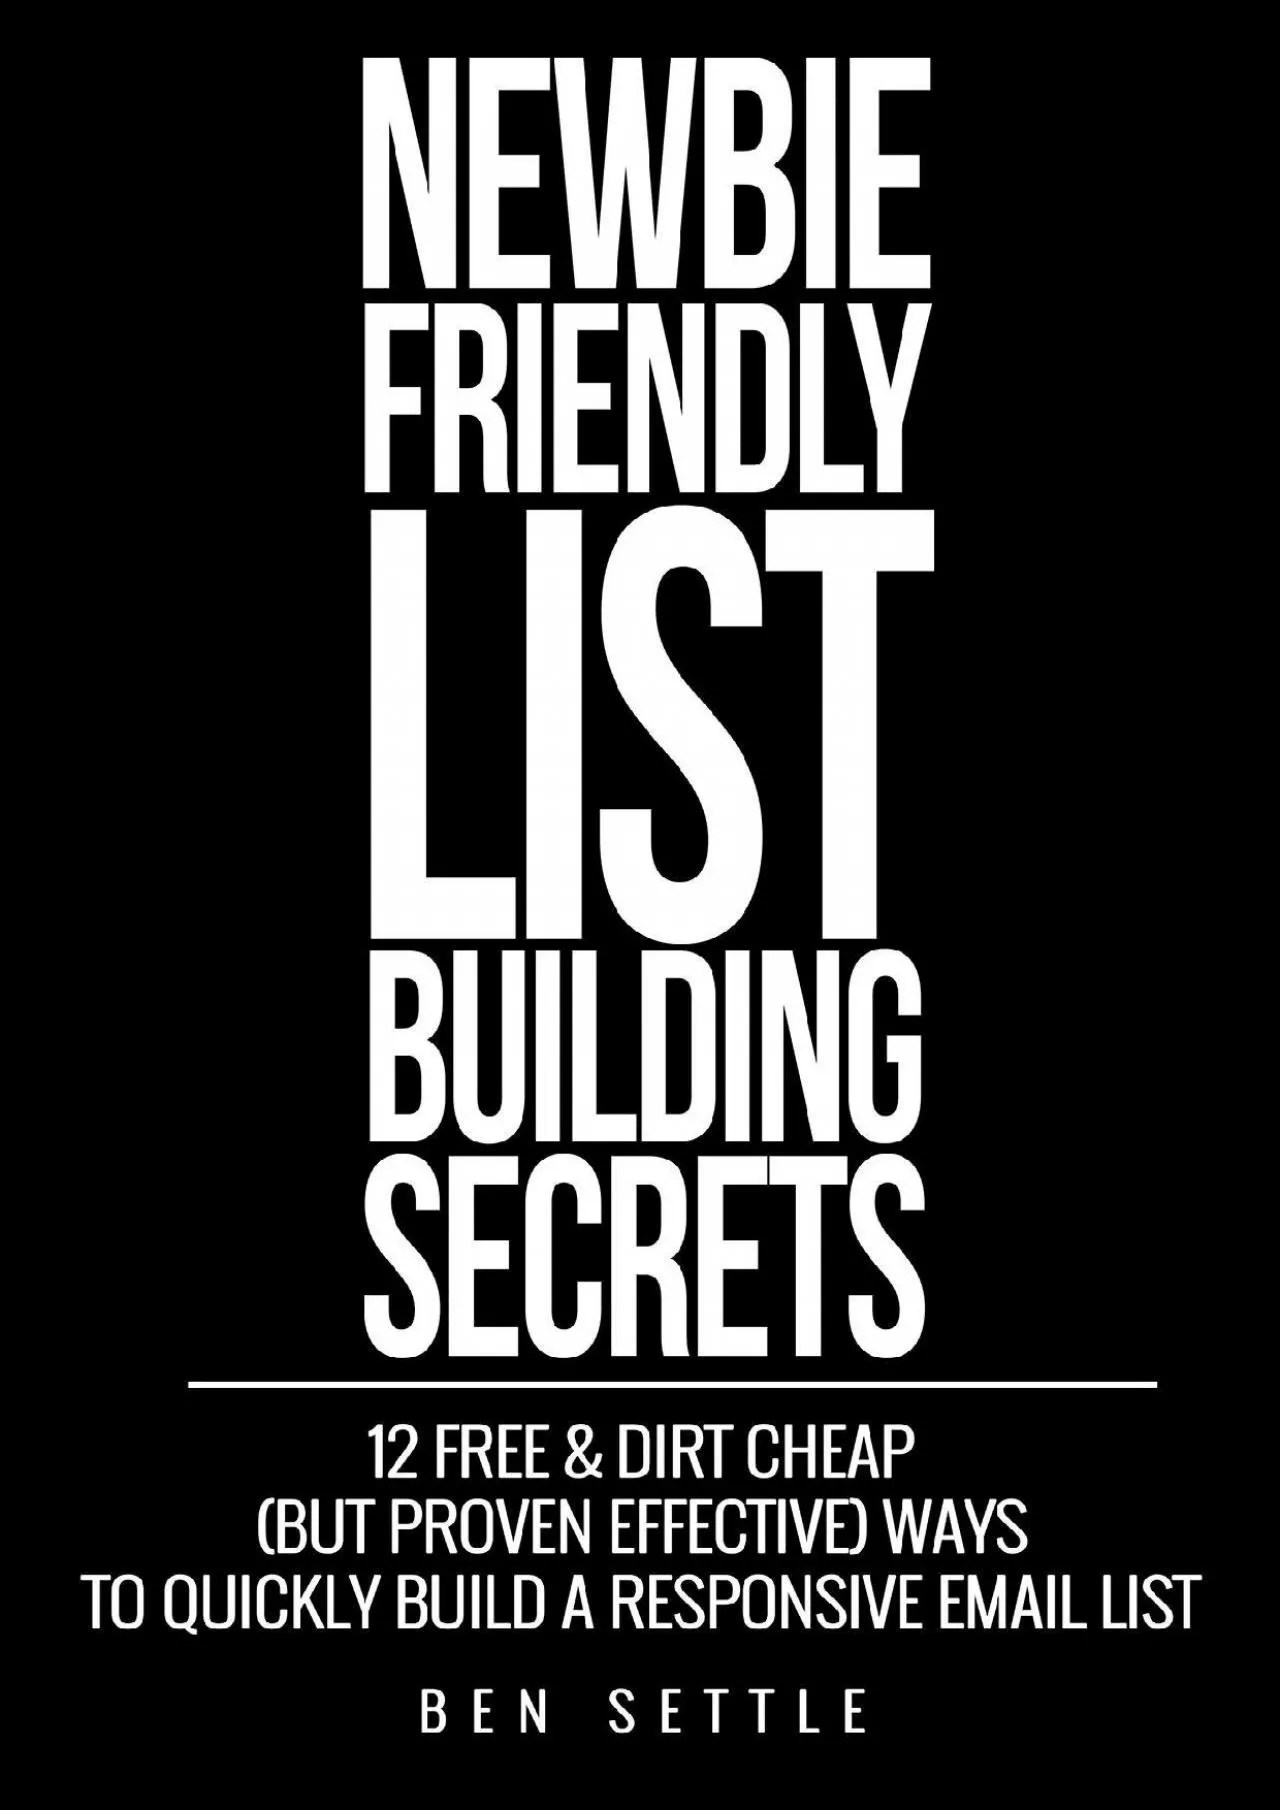 Newbie Friendly List Building Secrets 2 Free  Dirt Cheap but Proven Effective Ways to